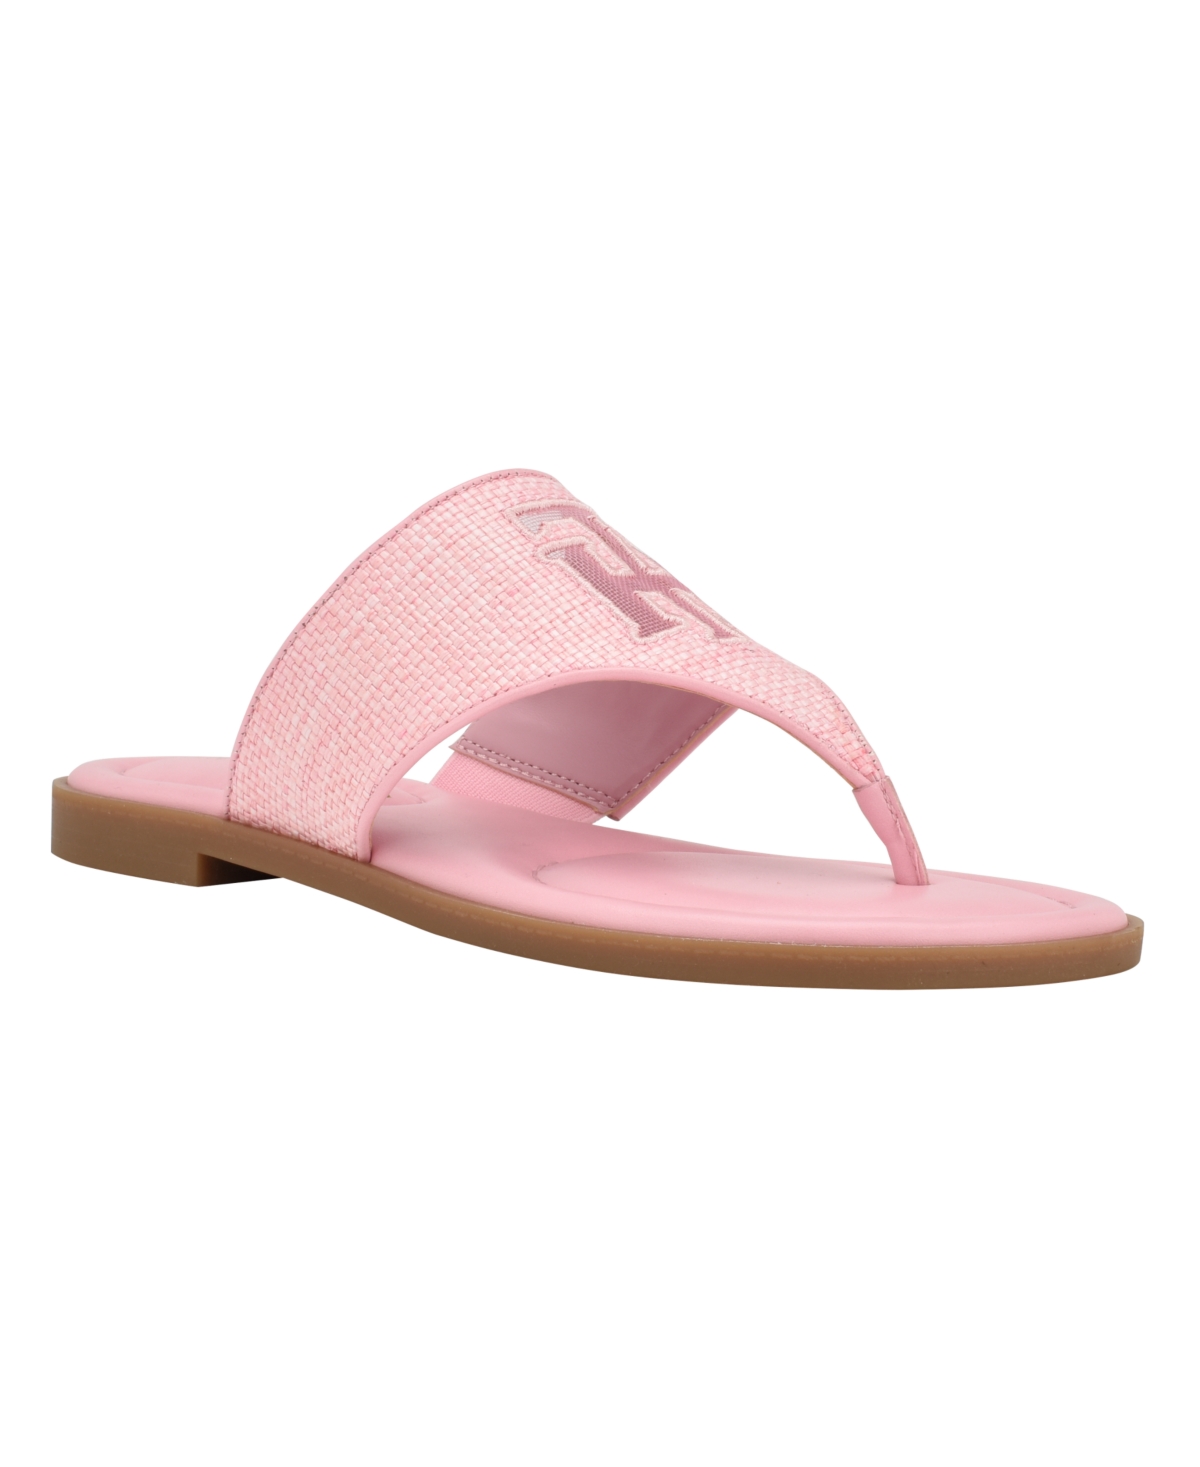 Monta Flop In Light Pink | ModeSens